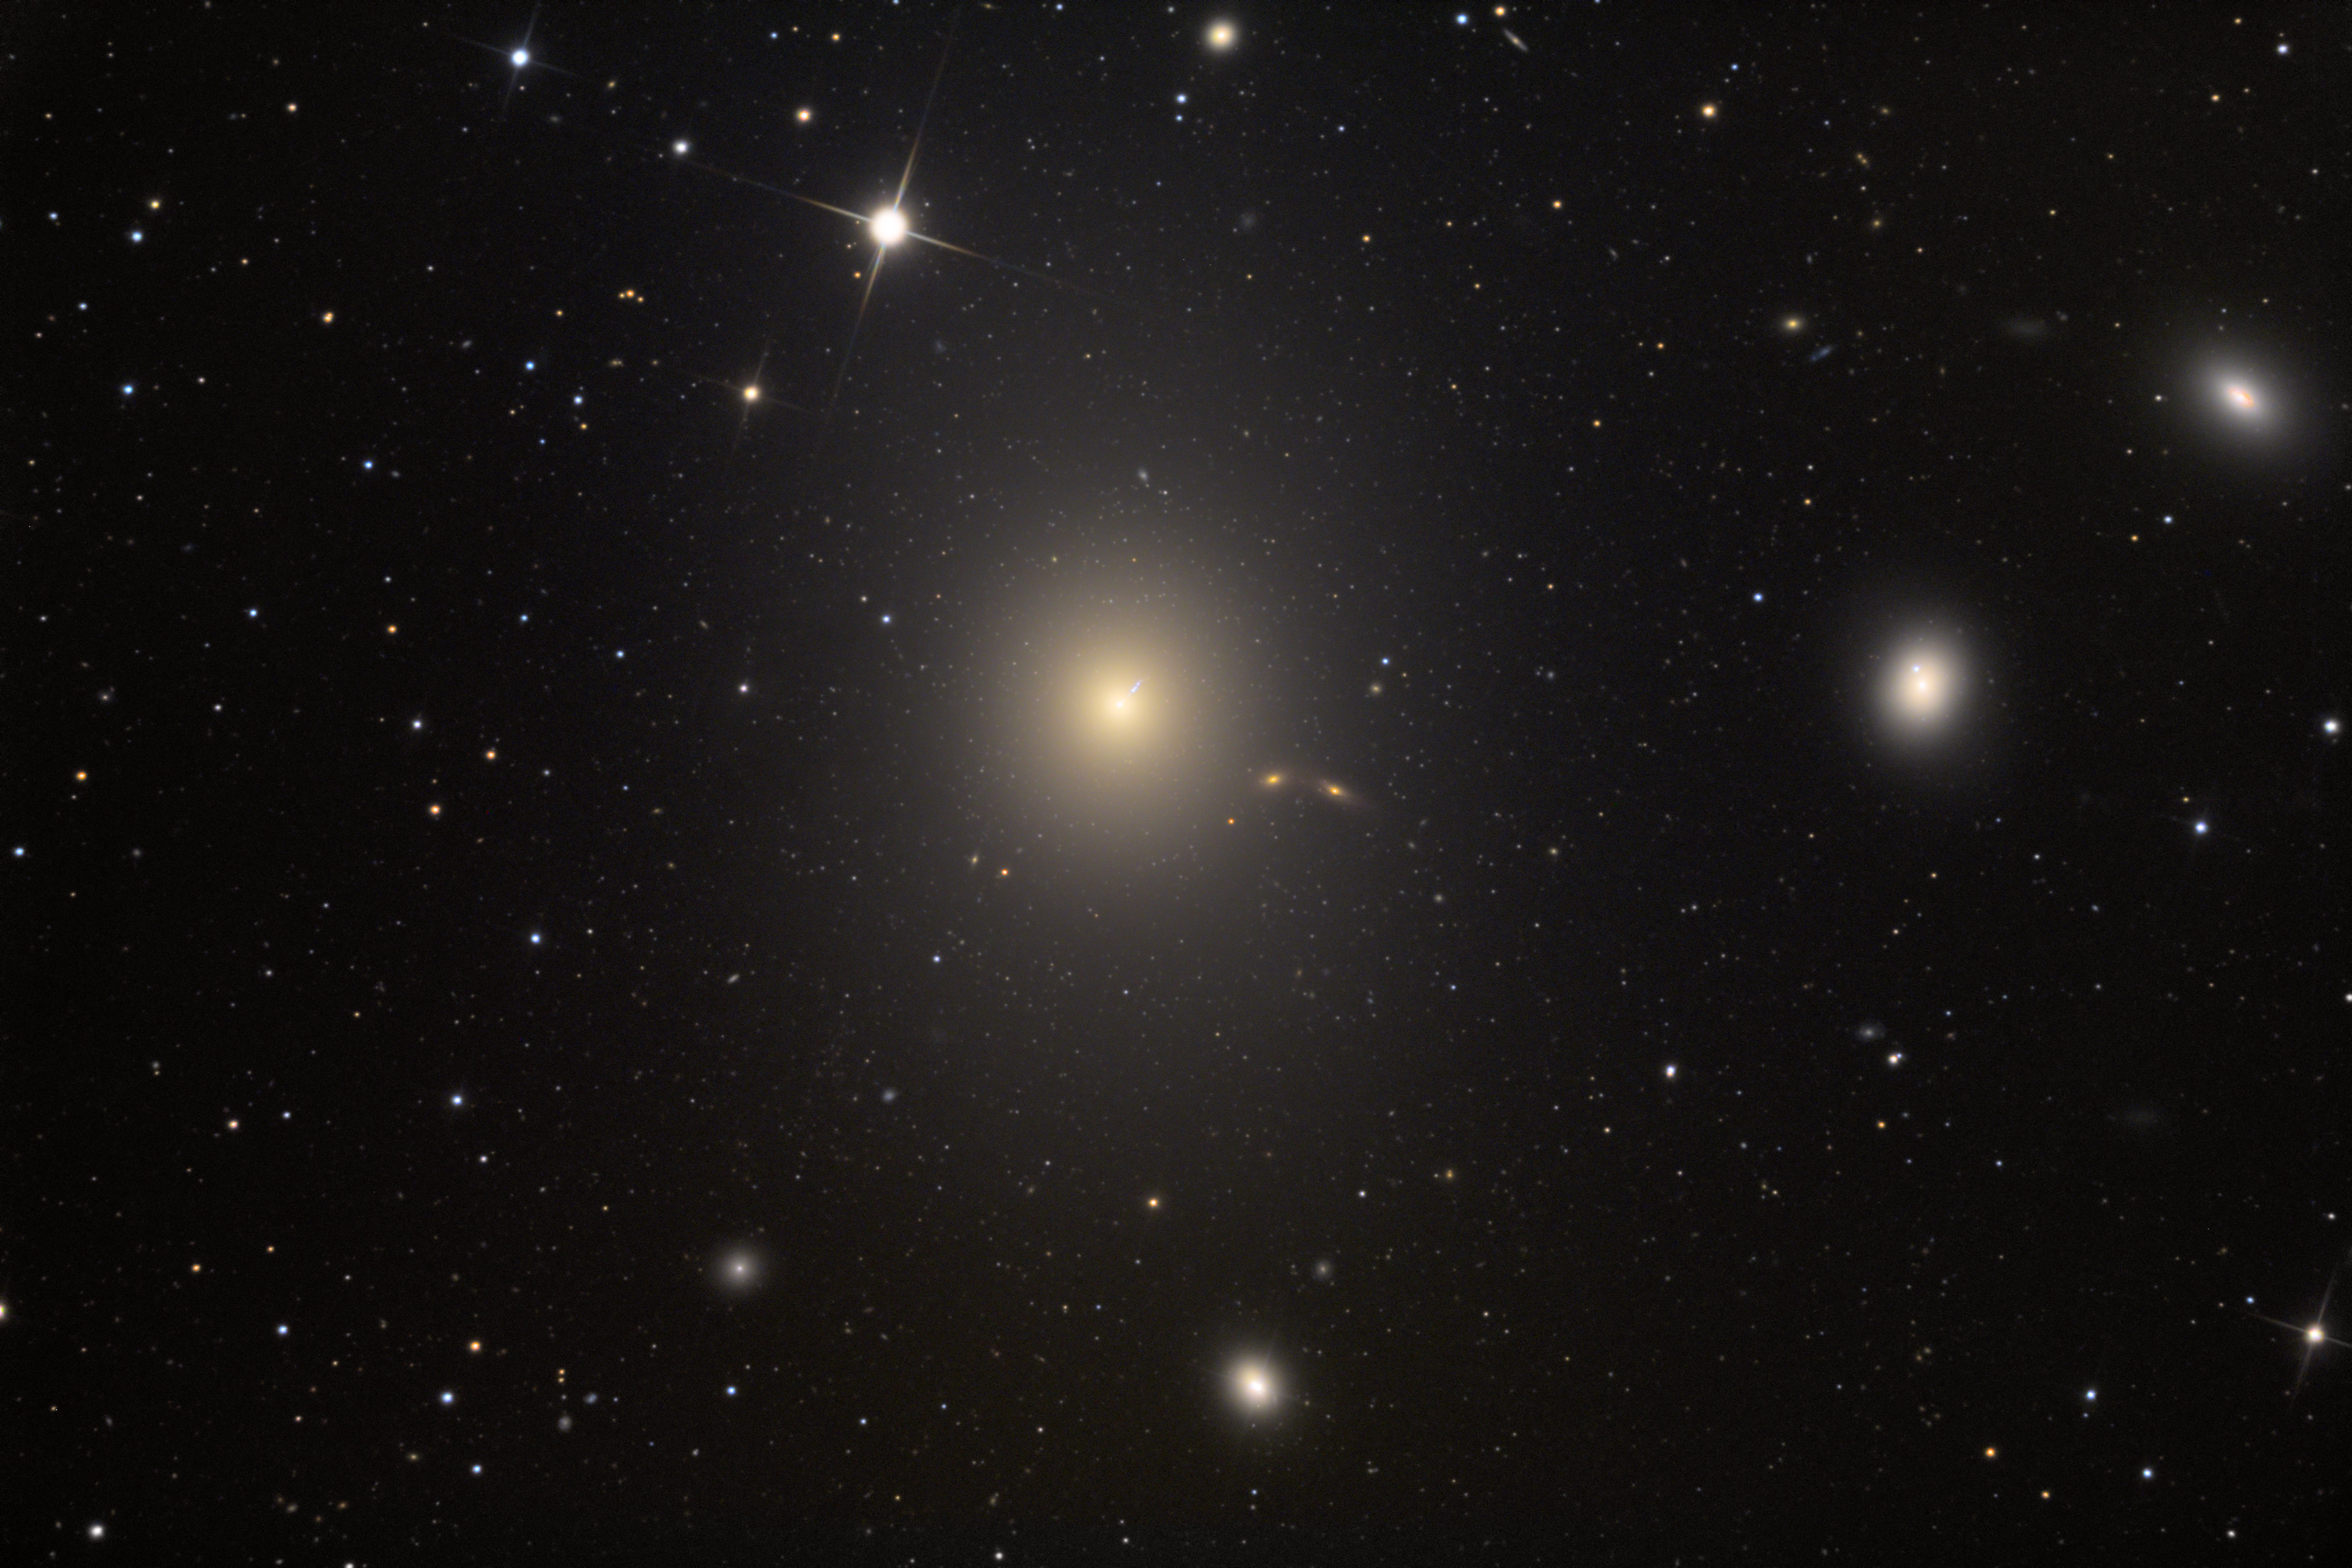 M87: Elliptical Galaxy with Jet